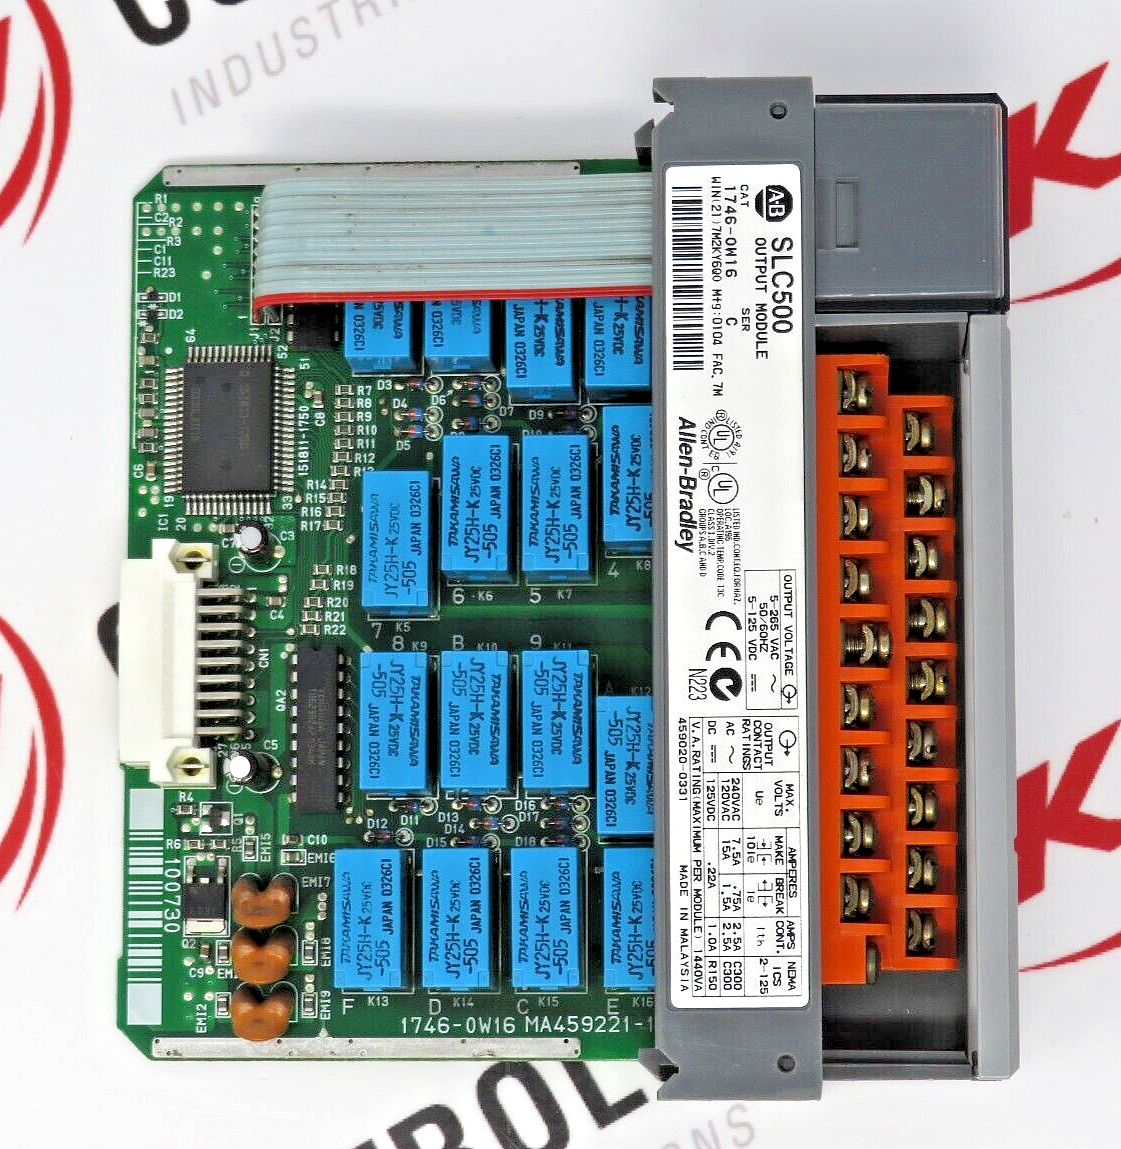 Allen-Bradley 1746-OW16 SLC 500 Digital Contact Output Module Series C